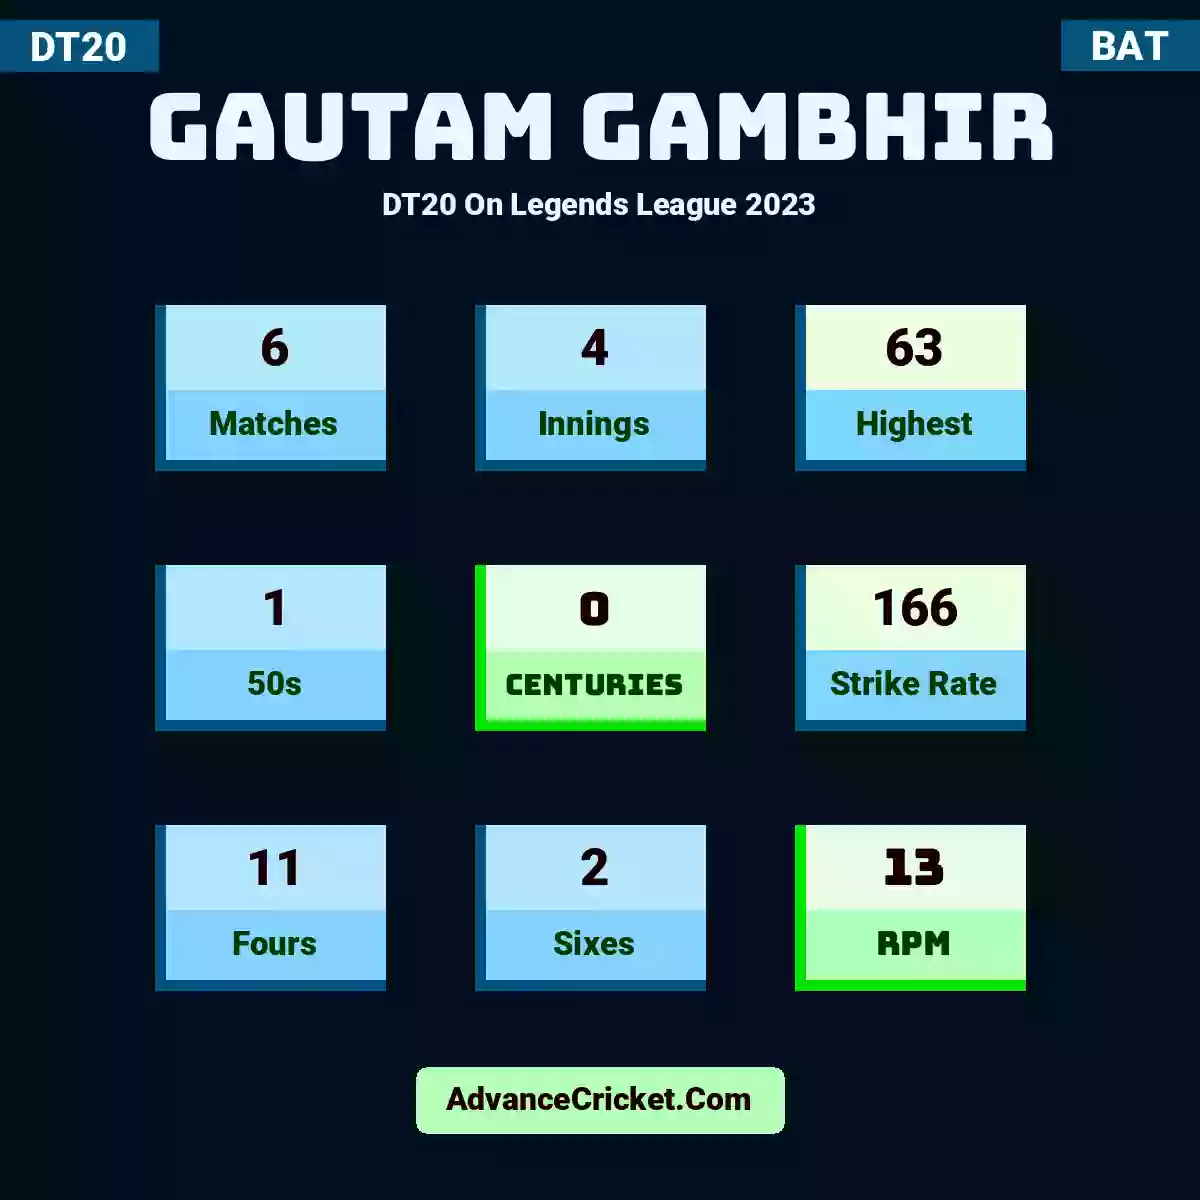 Gautam Gambhir DT20  On Legends League 2023, Gautam Gambhir played 6 matches, scored 63 runs as highest, 1 half-centuries, and 0 centuries, with a strike rate of 166. G.Gambhir hit 11 fours and 2 sixes, with an RPM of 13.